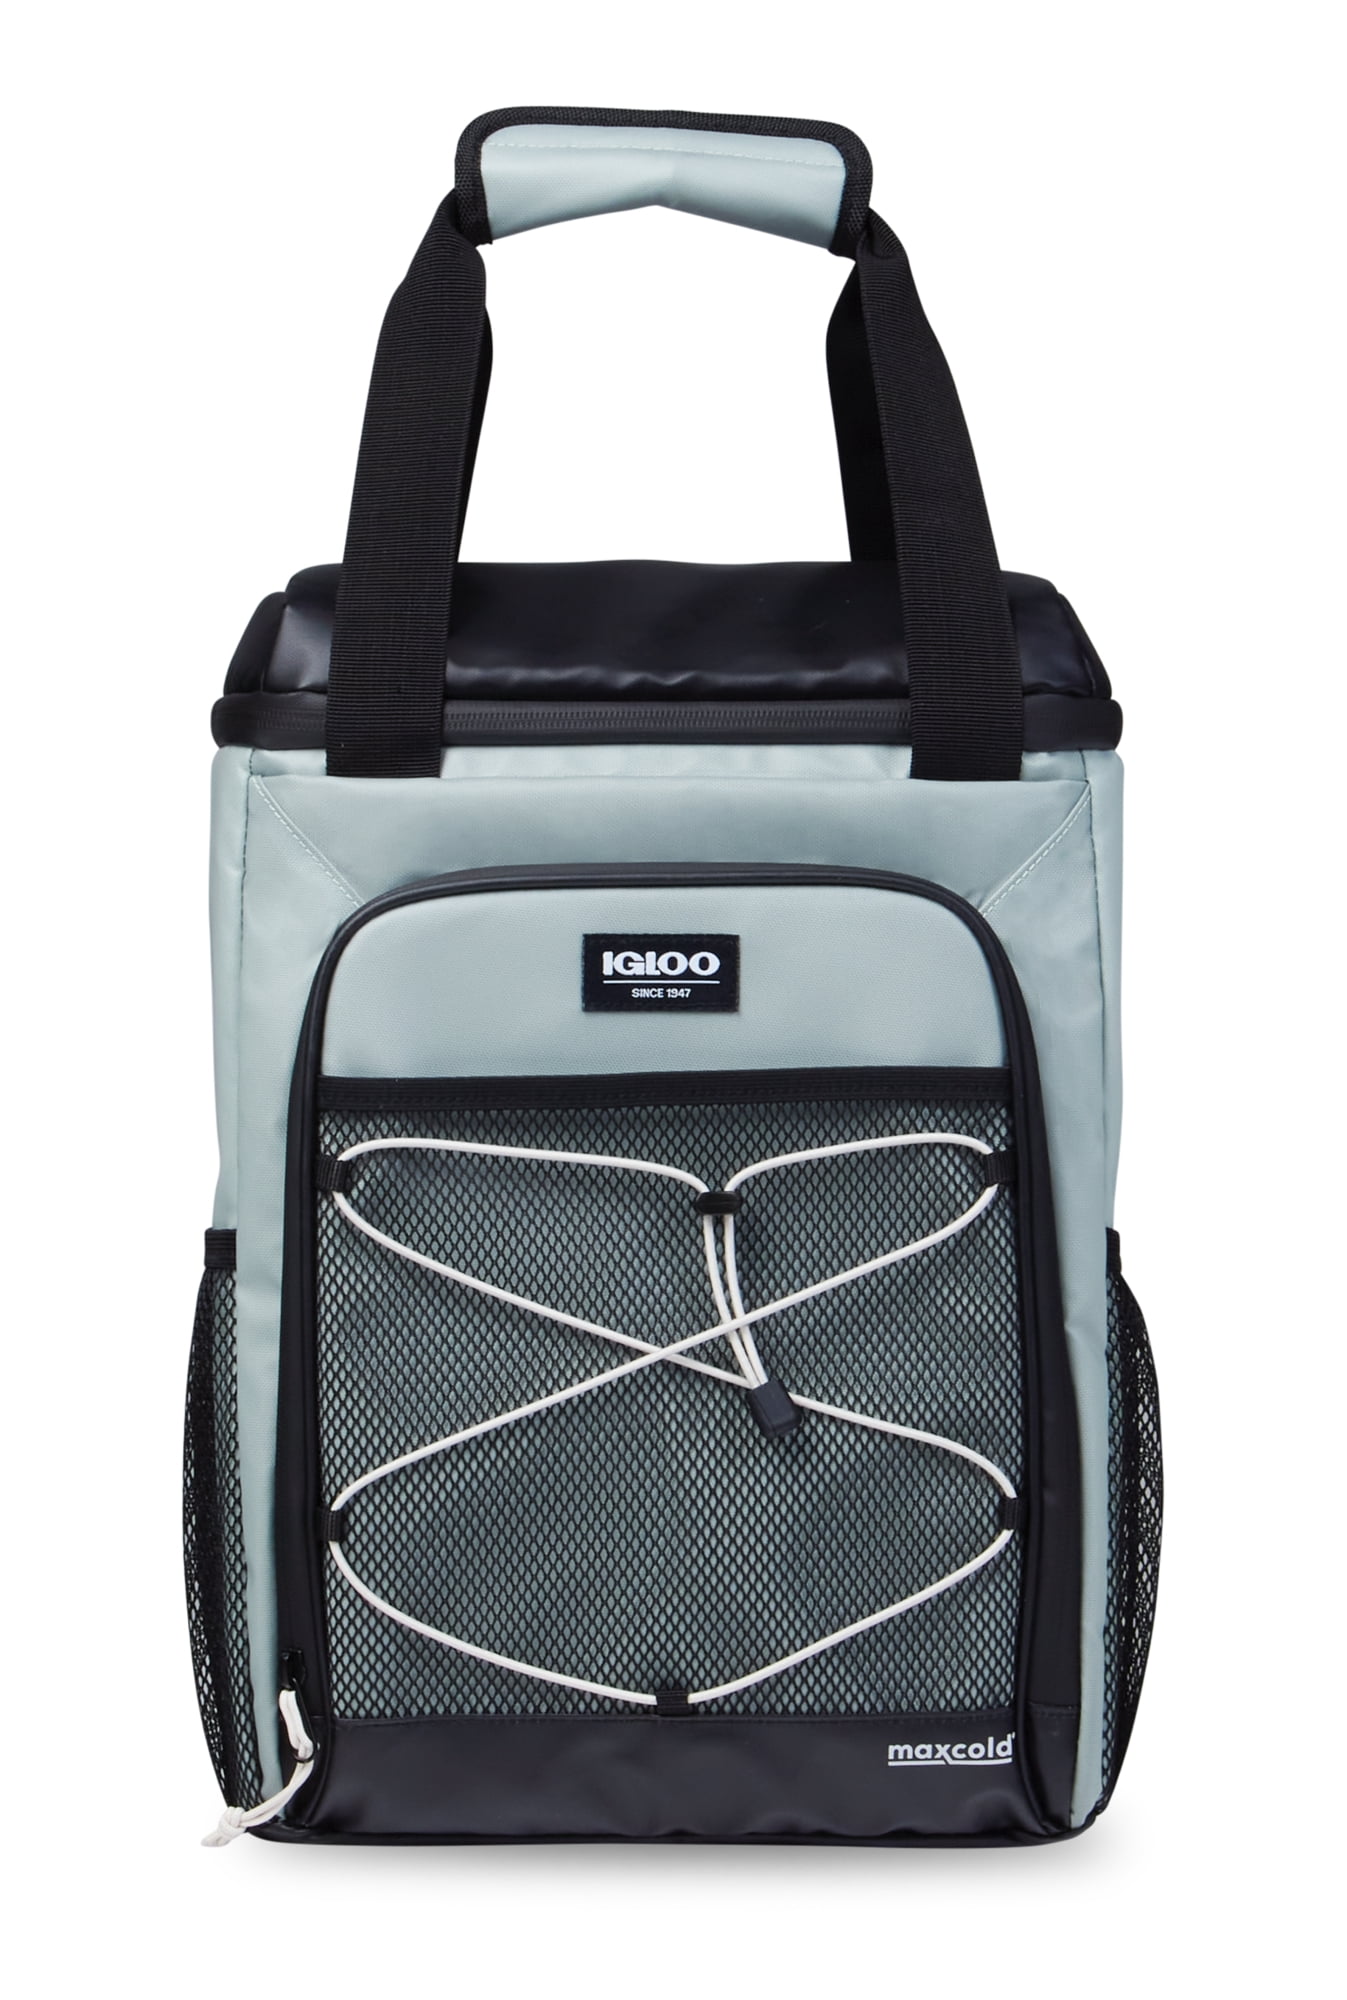 Igloo Overland 28 cans Durable Backpack Softsided Cooler, Green - Walmart .com